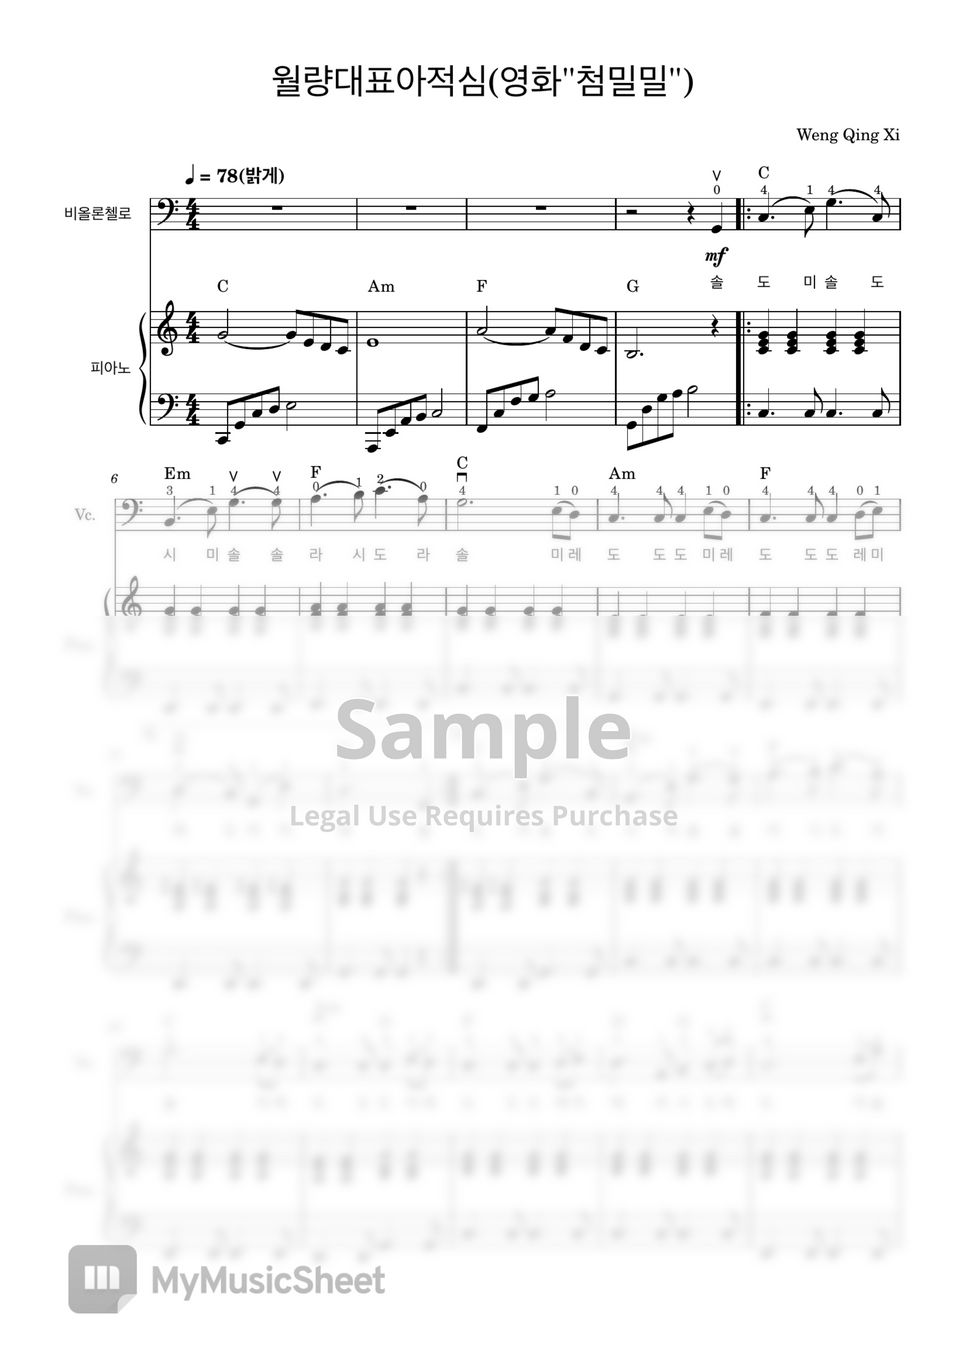 Weng Qing Xi - 월량대표아적심 (첼로+피아노, 계이름 & 손가락 번호 포함) by 첼로마을